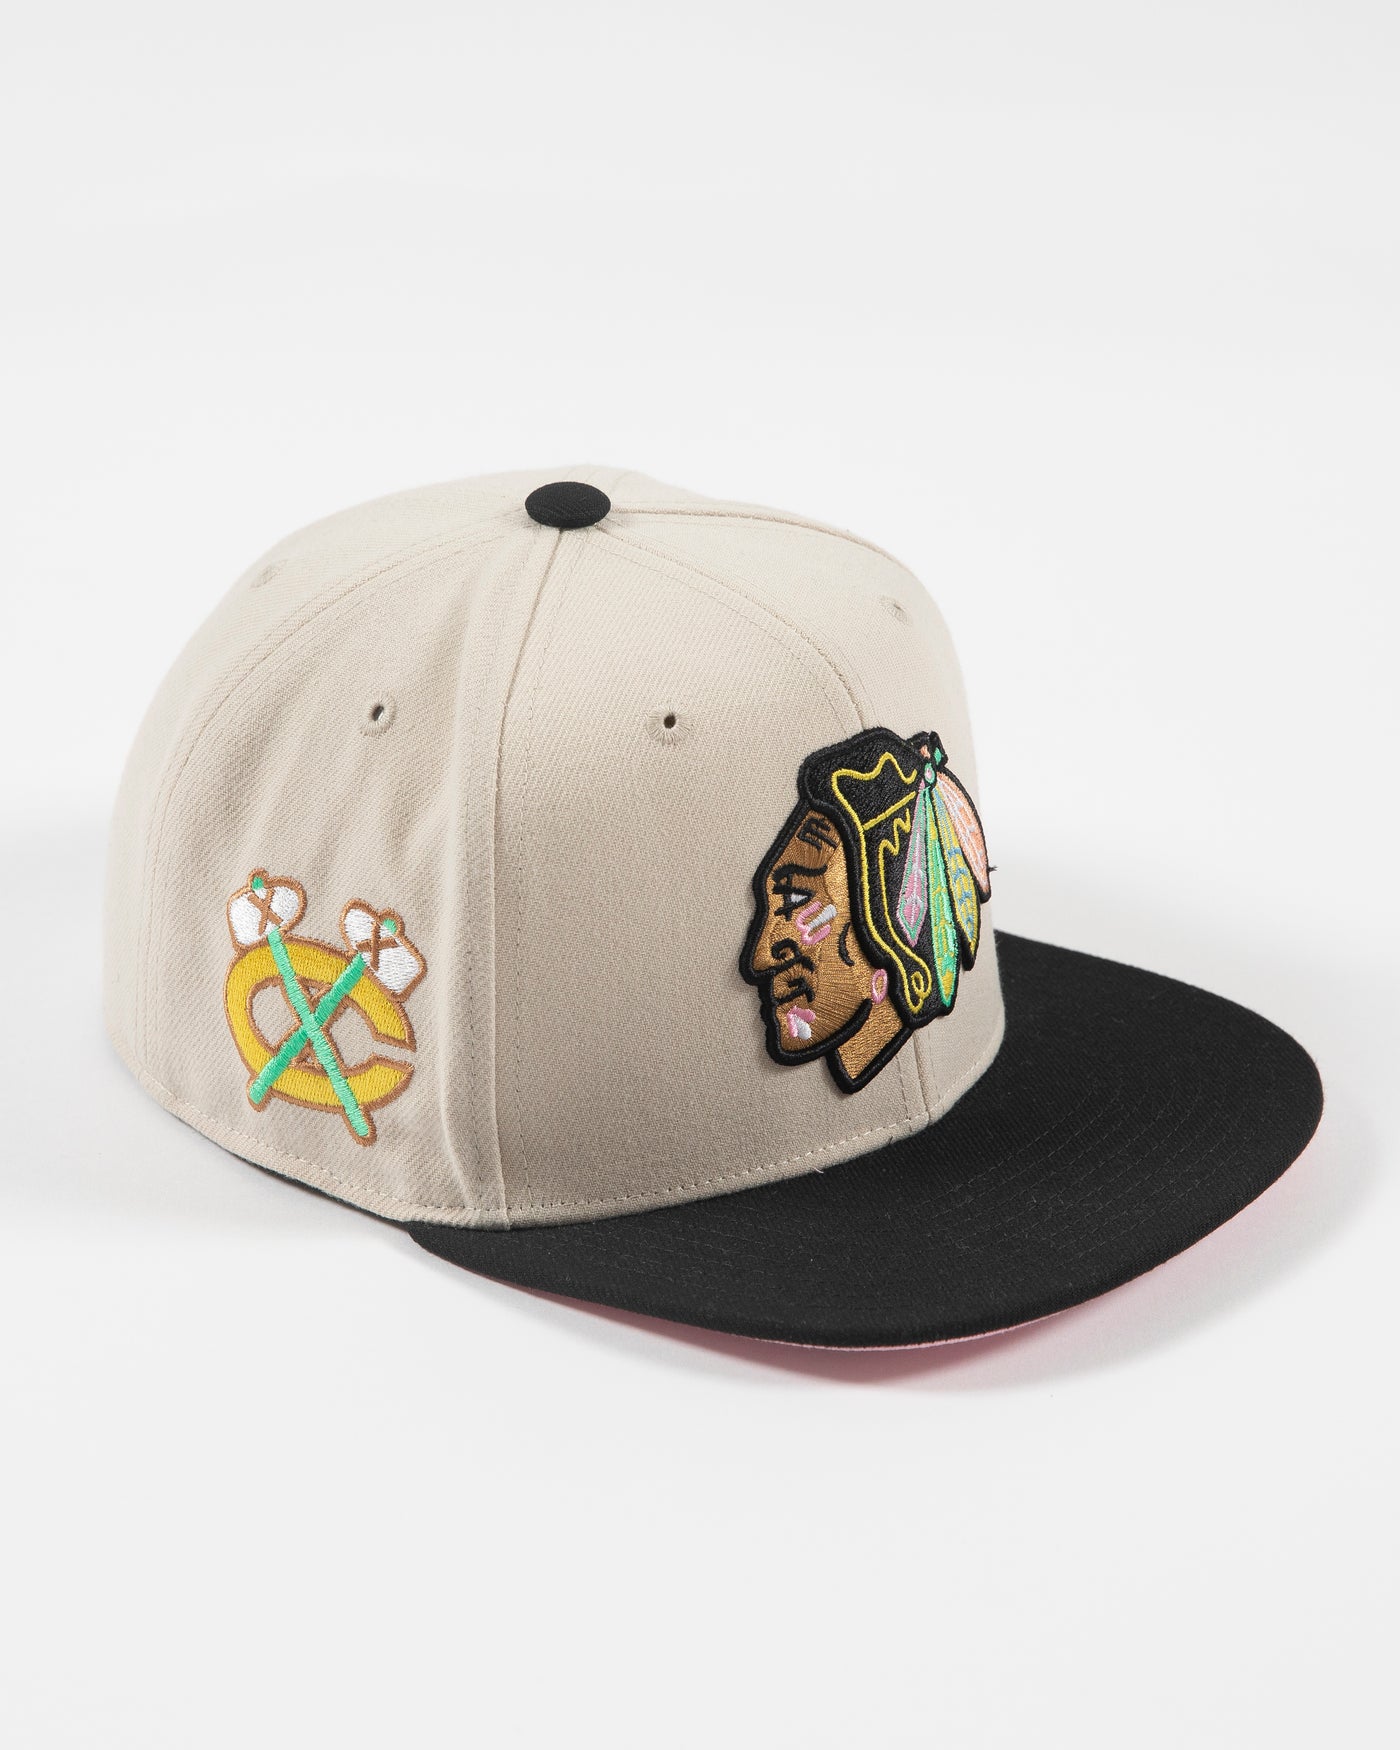 Chicago Blackhawks Hats, Blackhawks Snapback, Baseball Cap